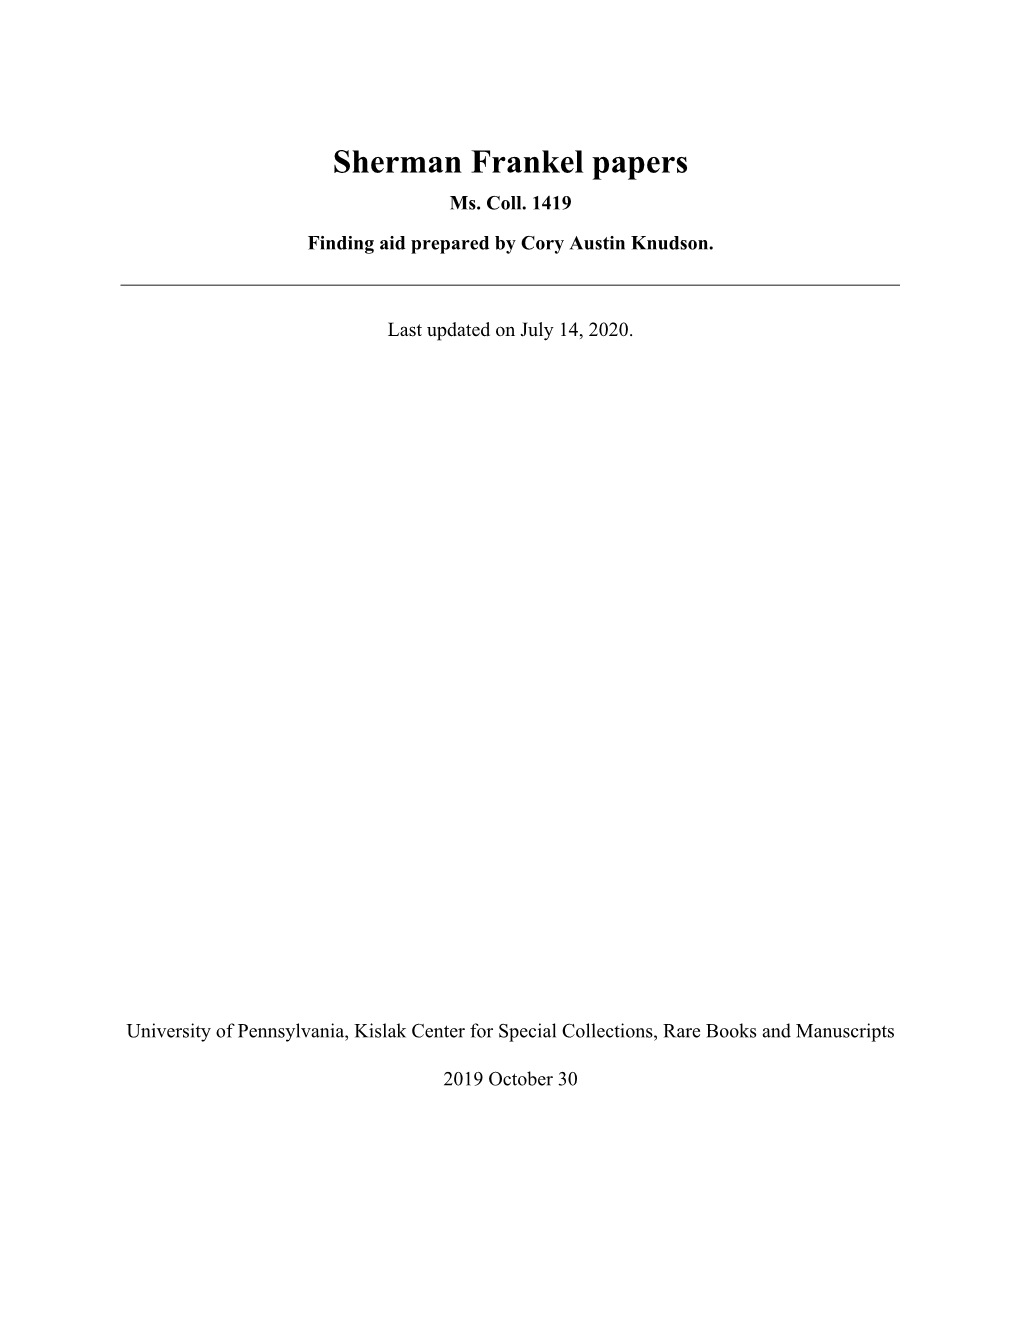 Sherman Frankel Papers Ms